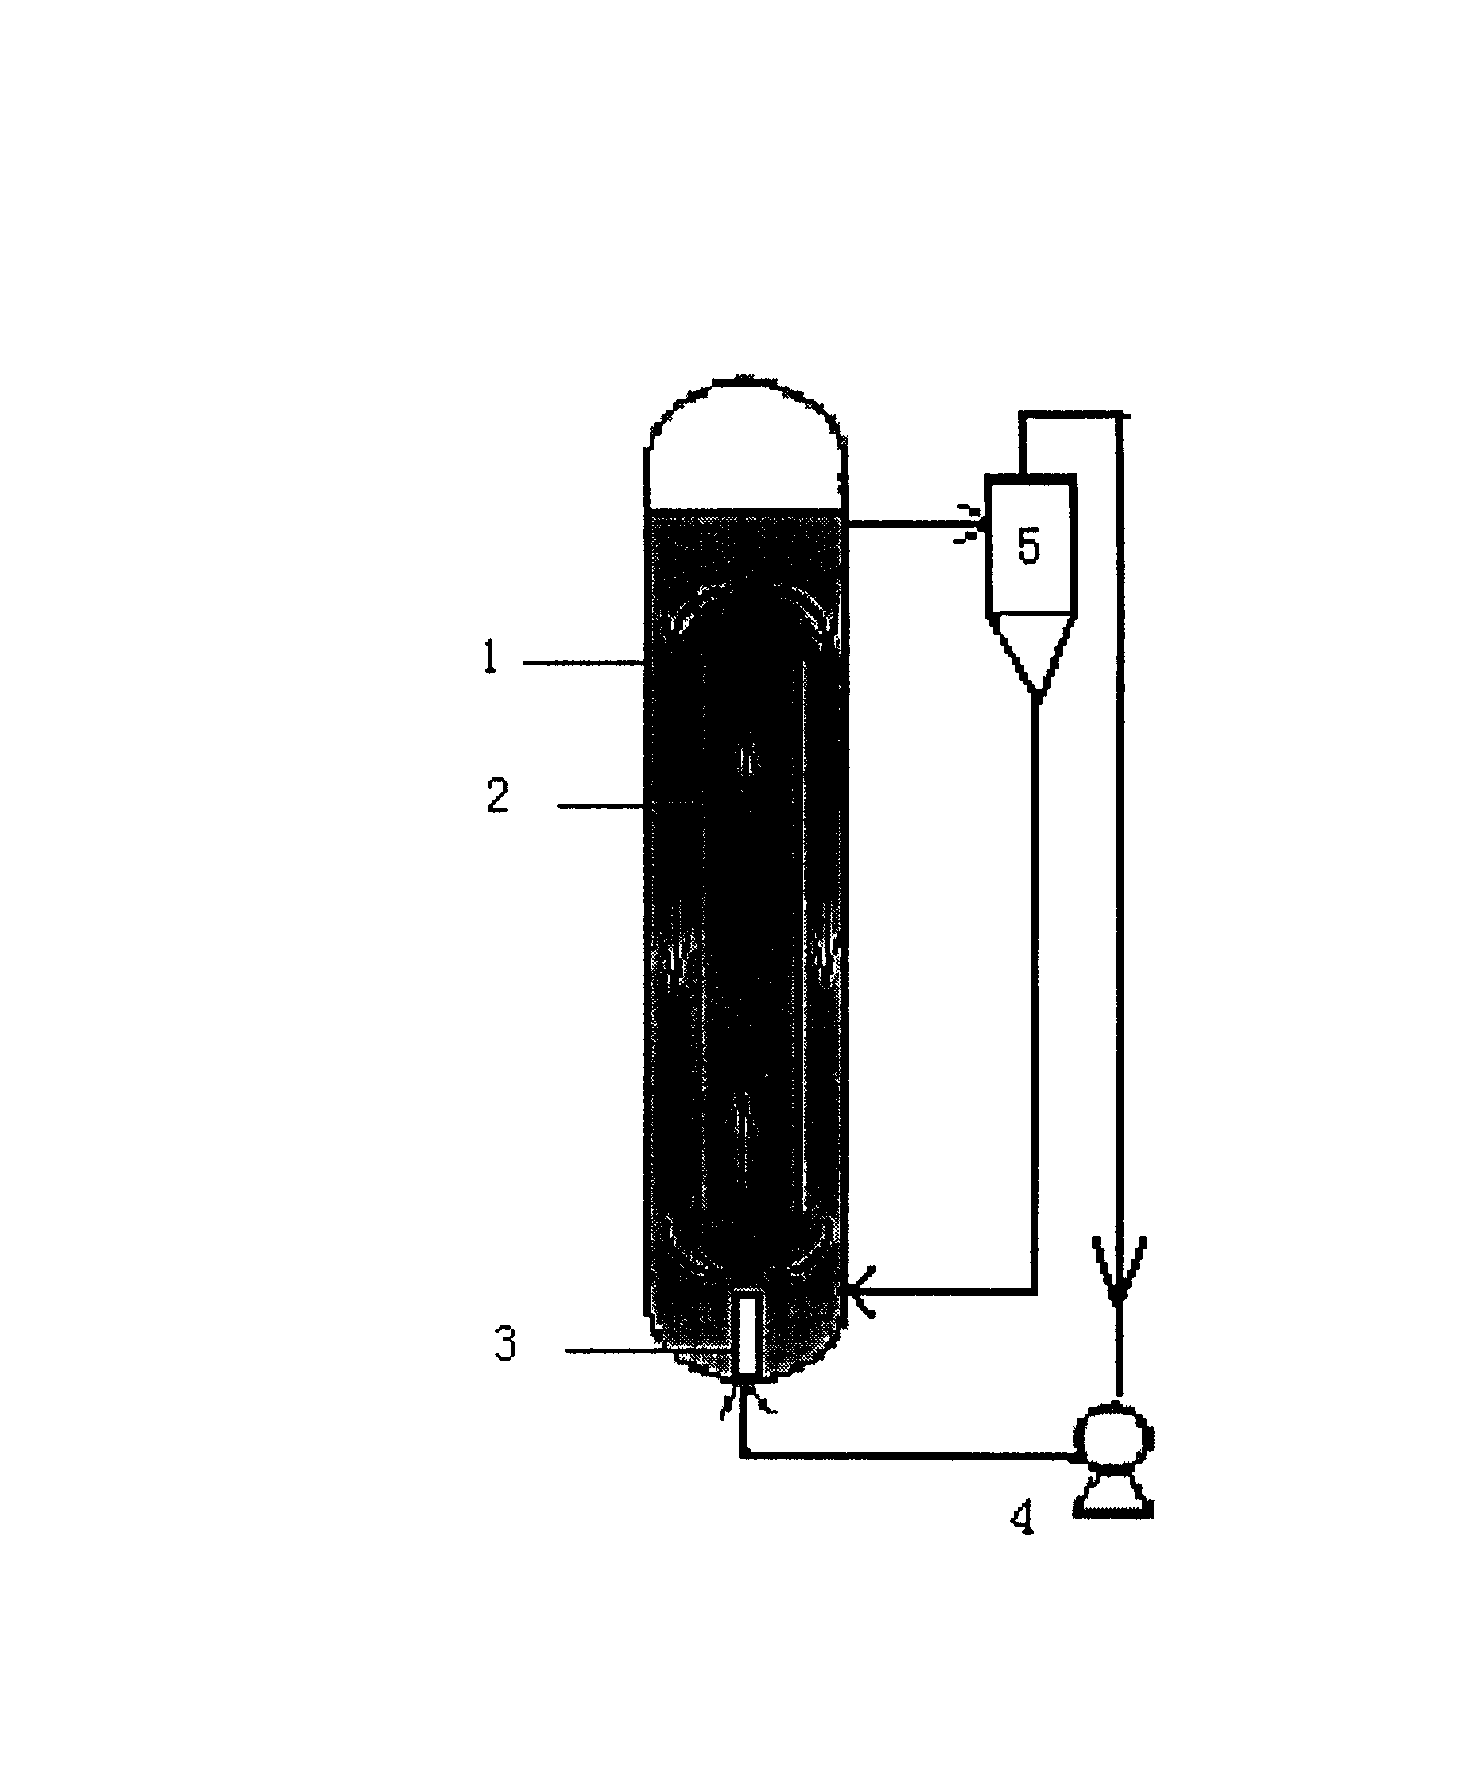 Method for producing acetamiprid